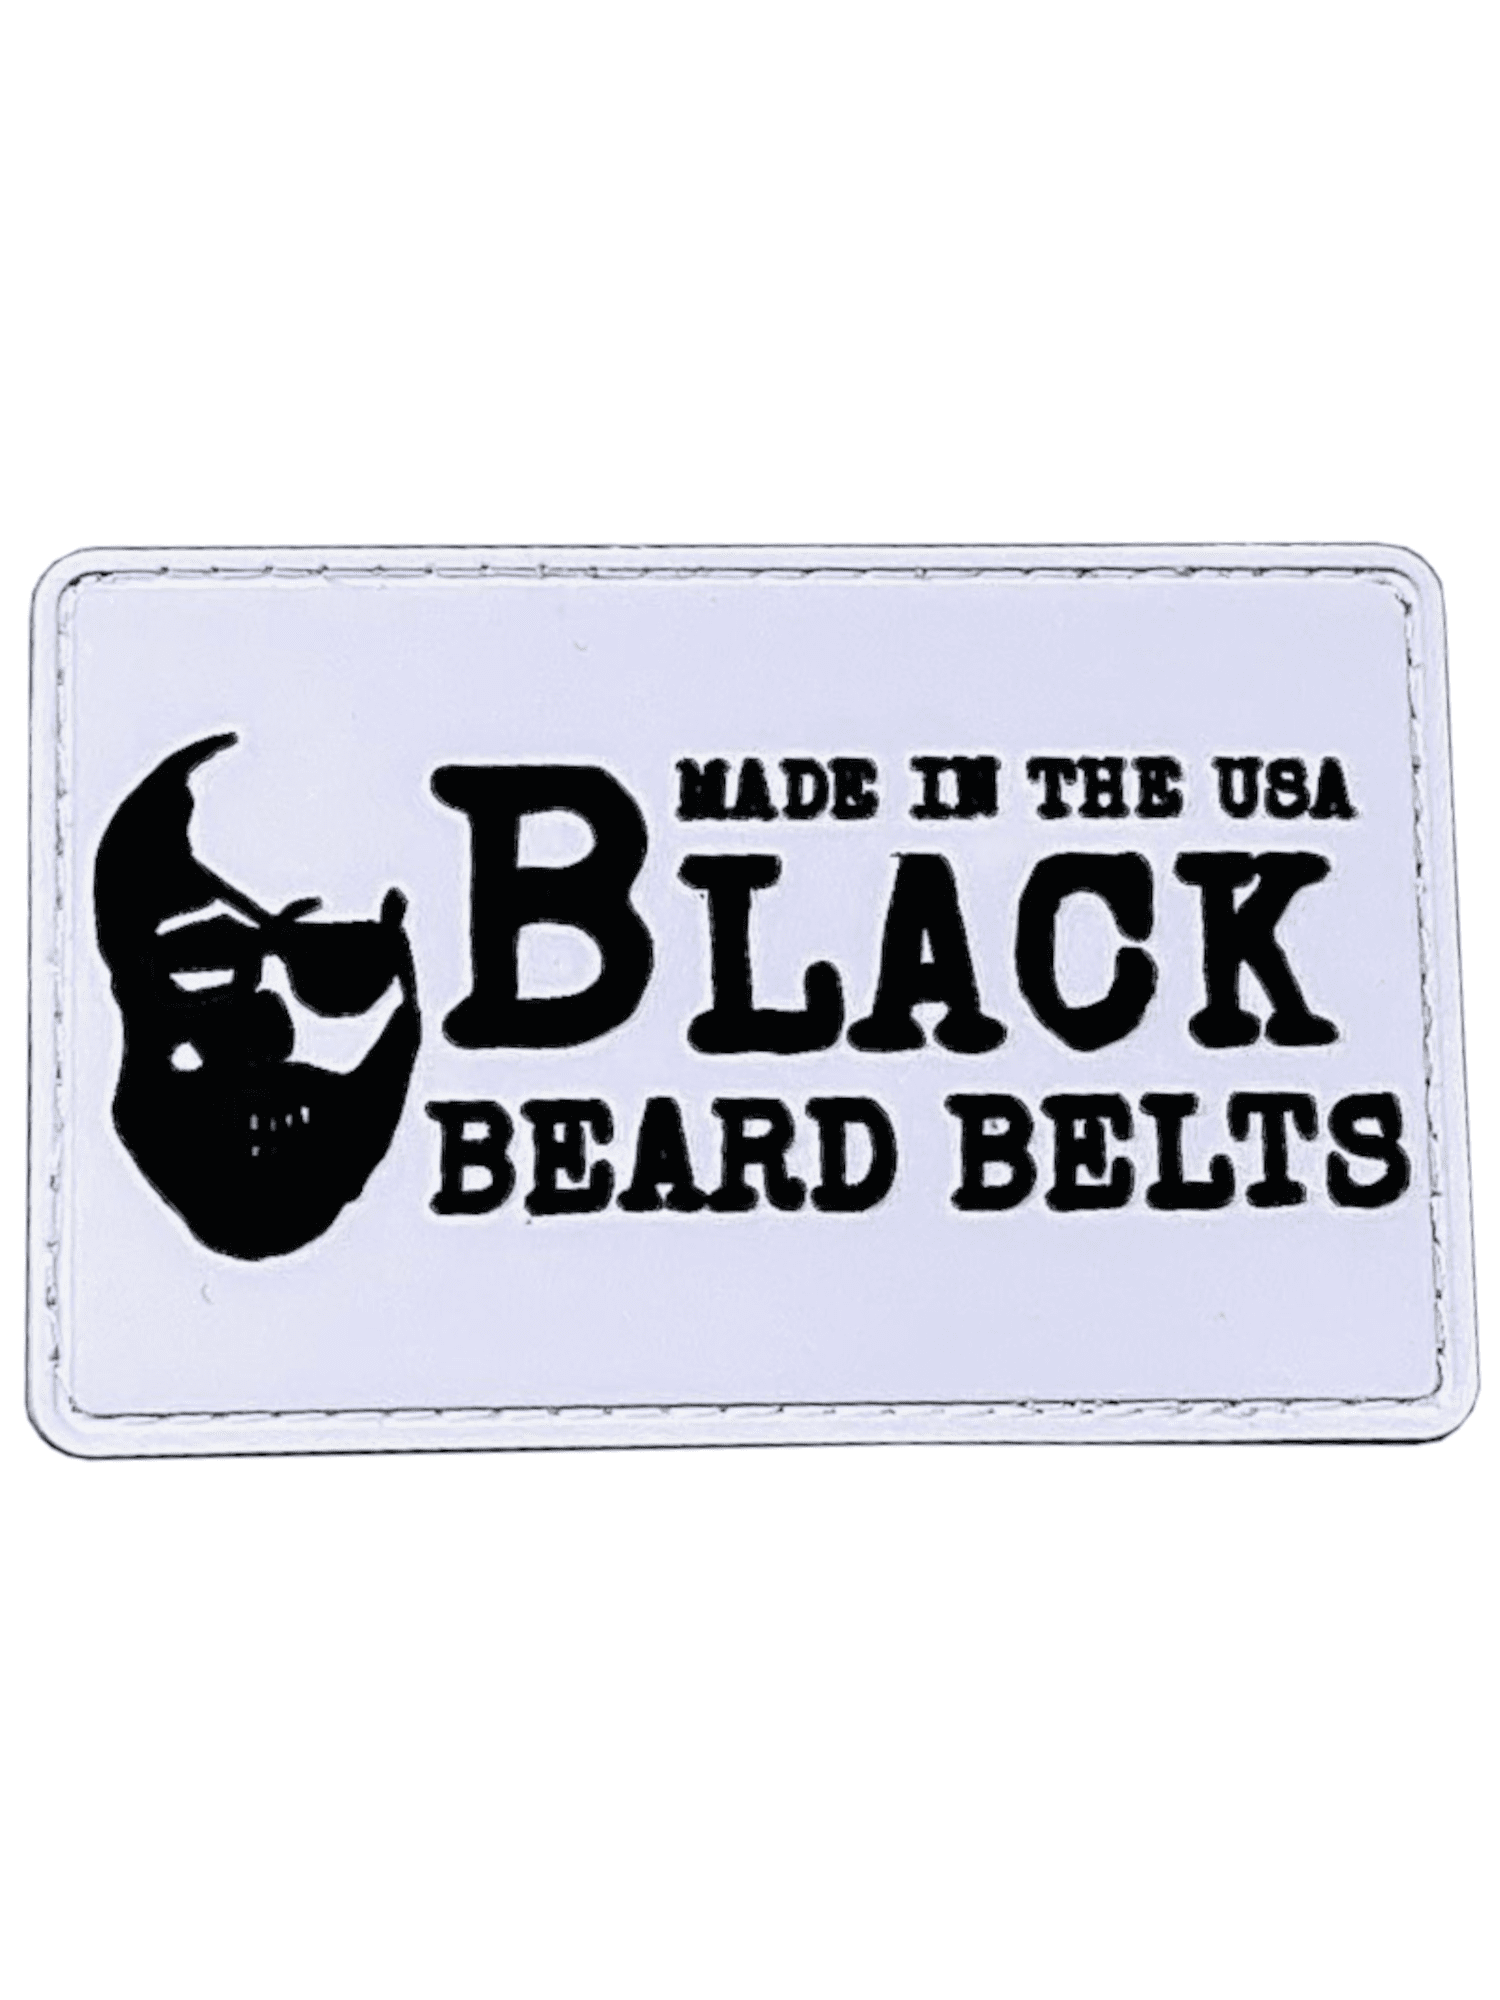 Black Beard Belts Patch Design